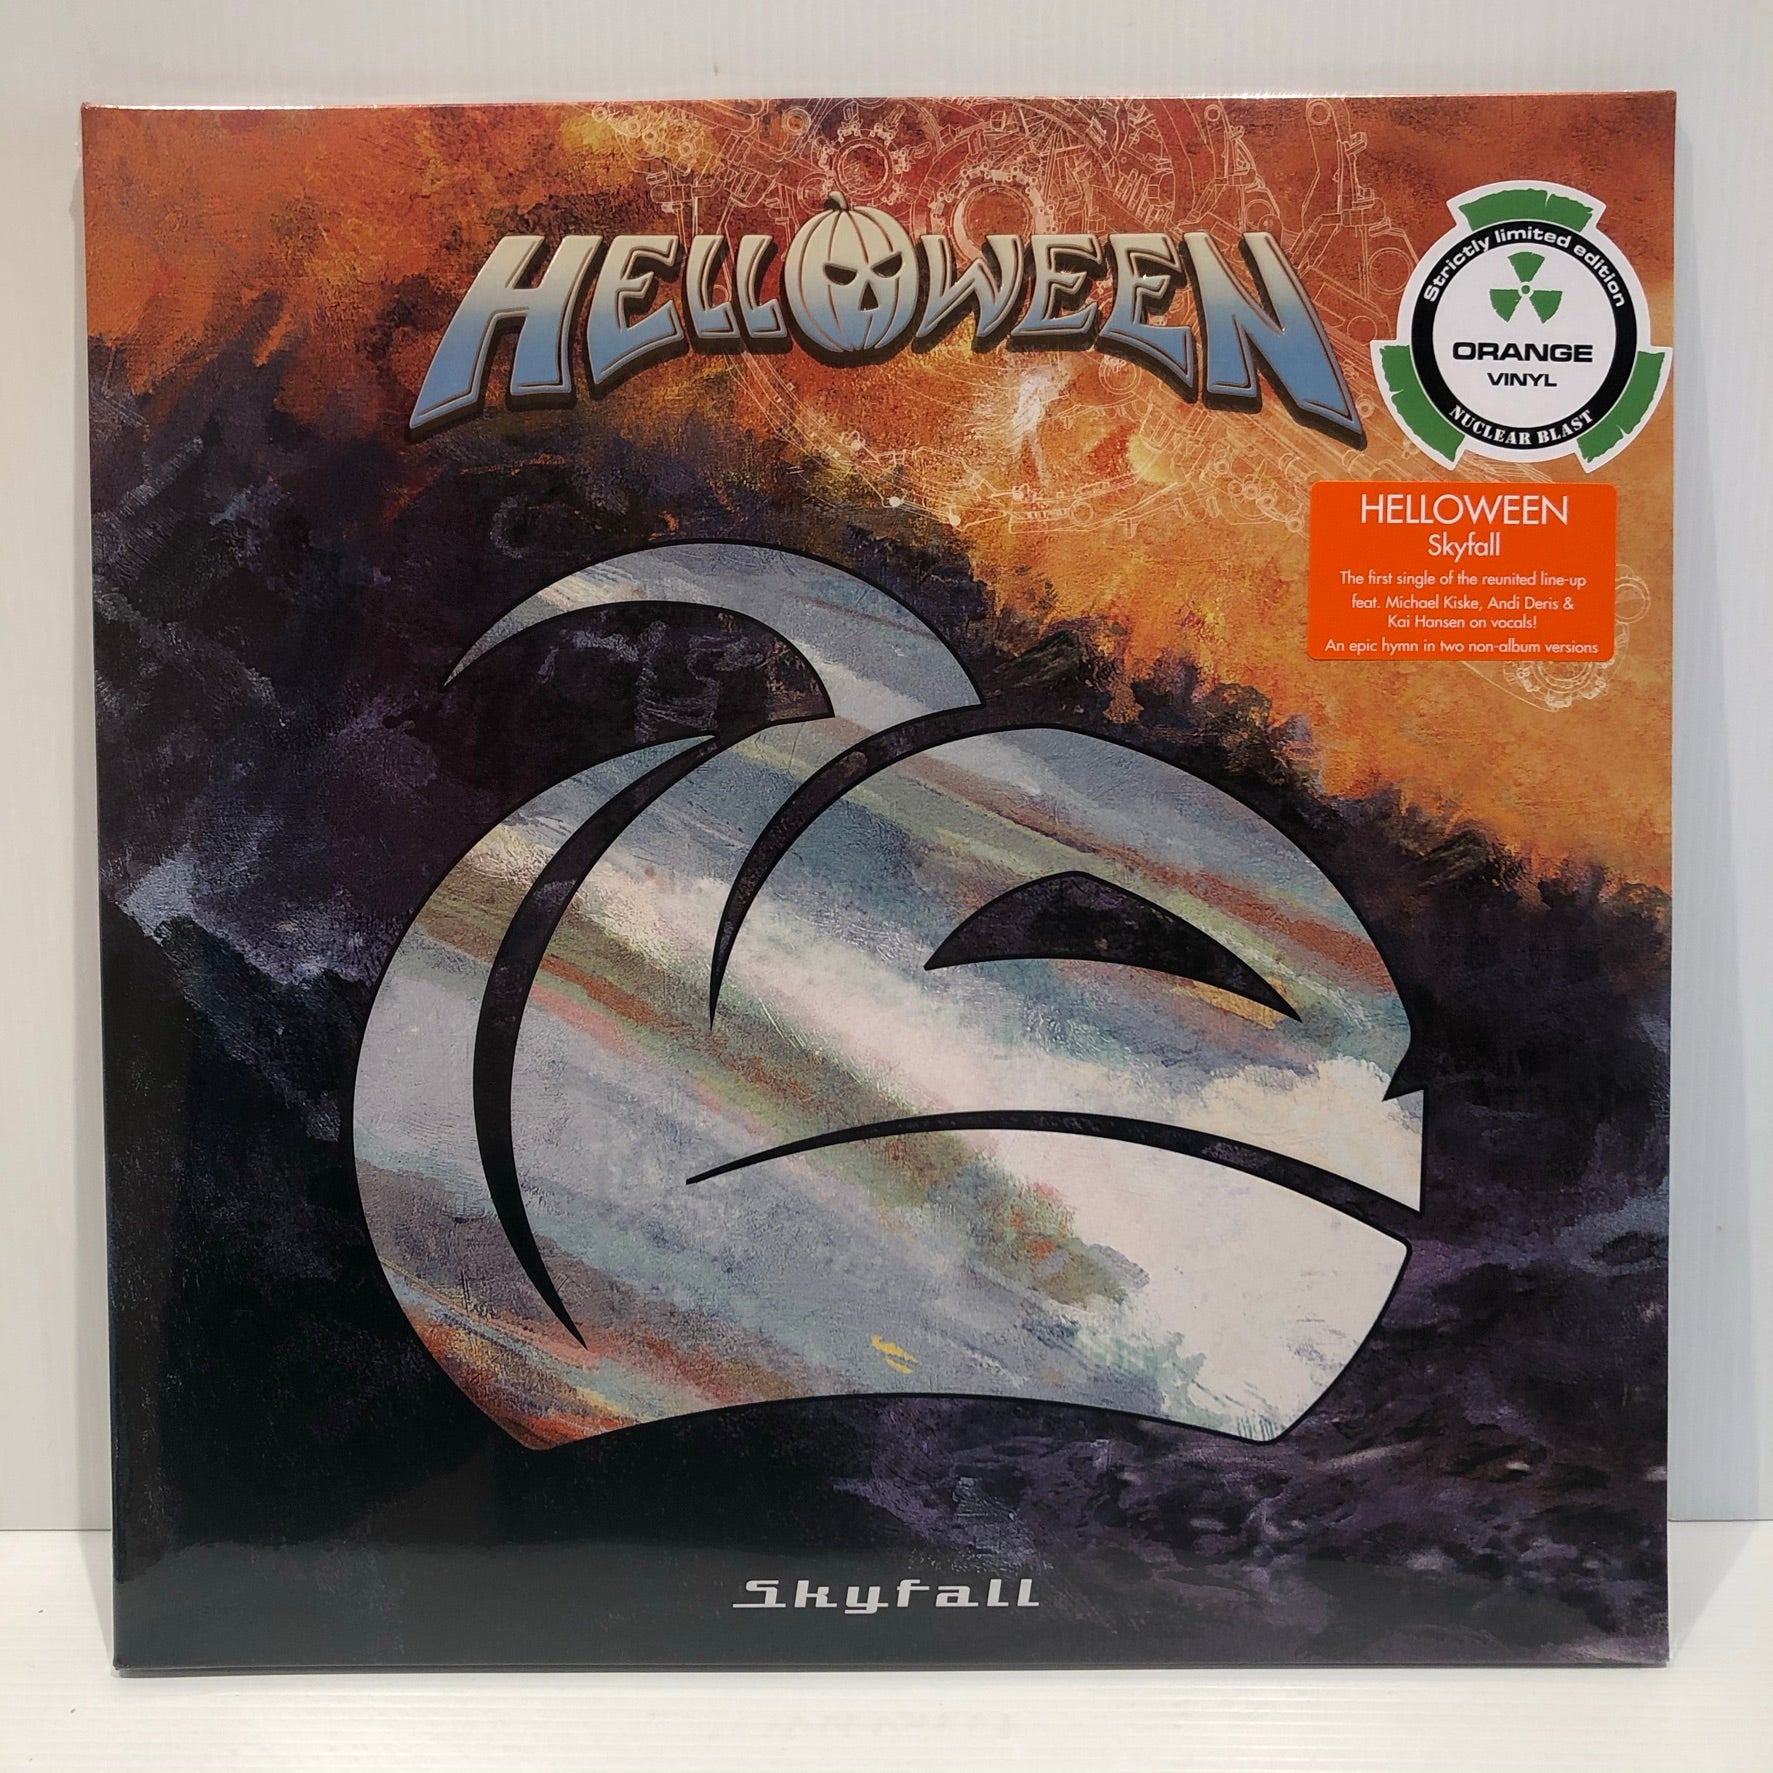 Helloween - Skyfall/Indestructible - new 12" limited ORANGE vinyl rockrecordscollectors